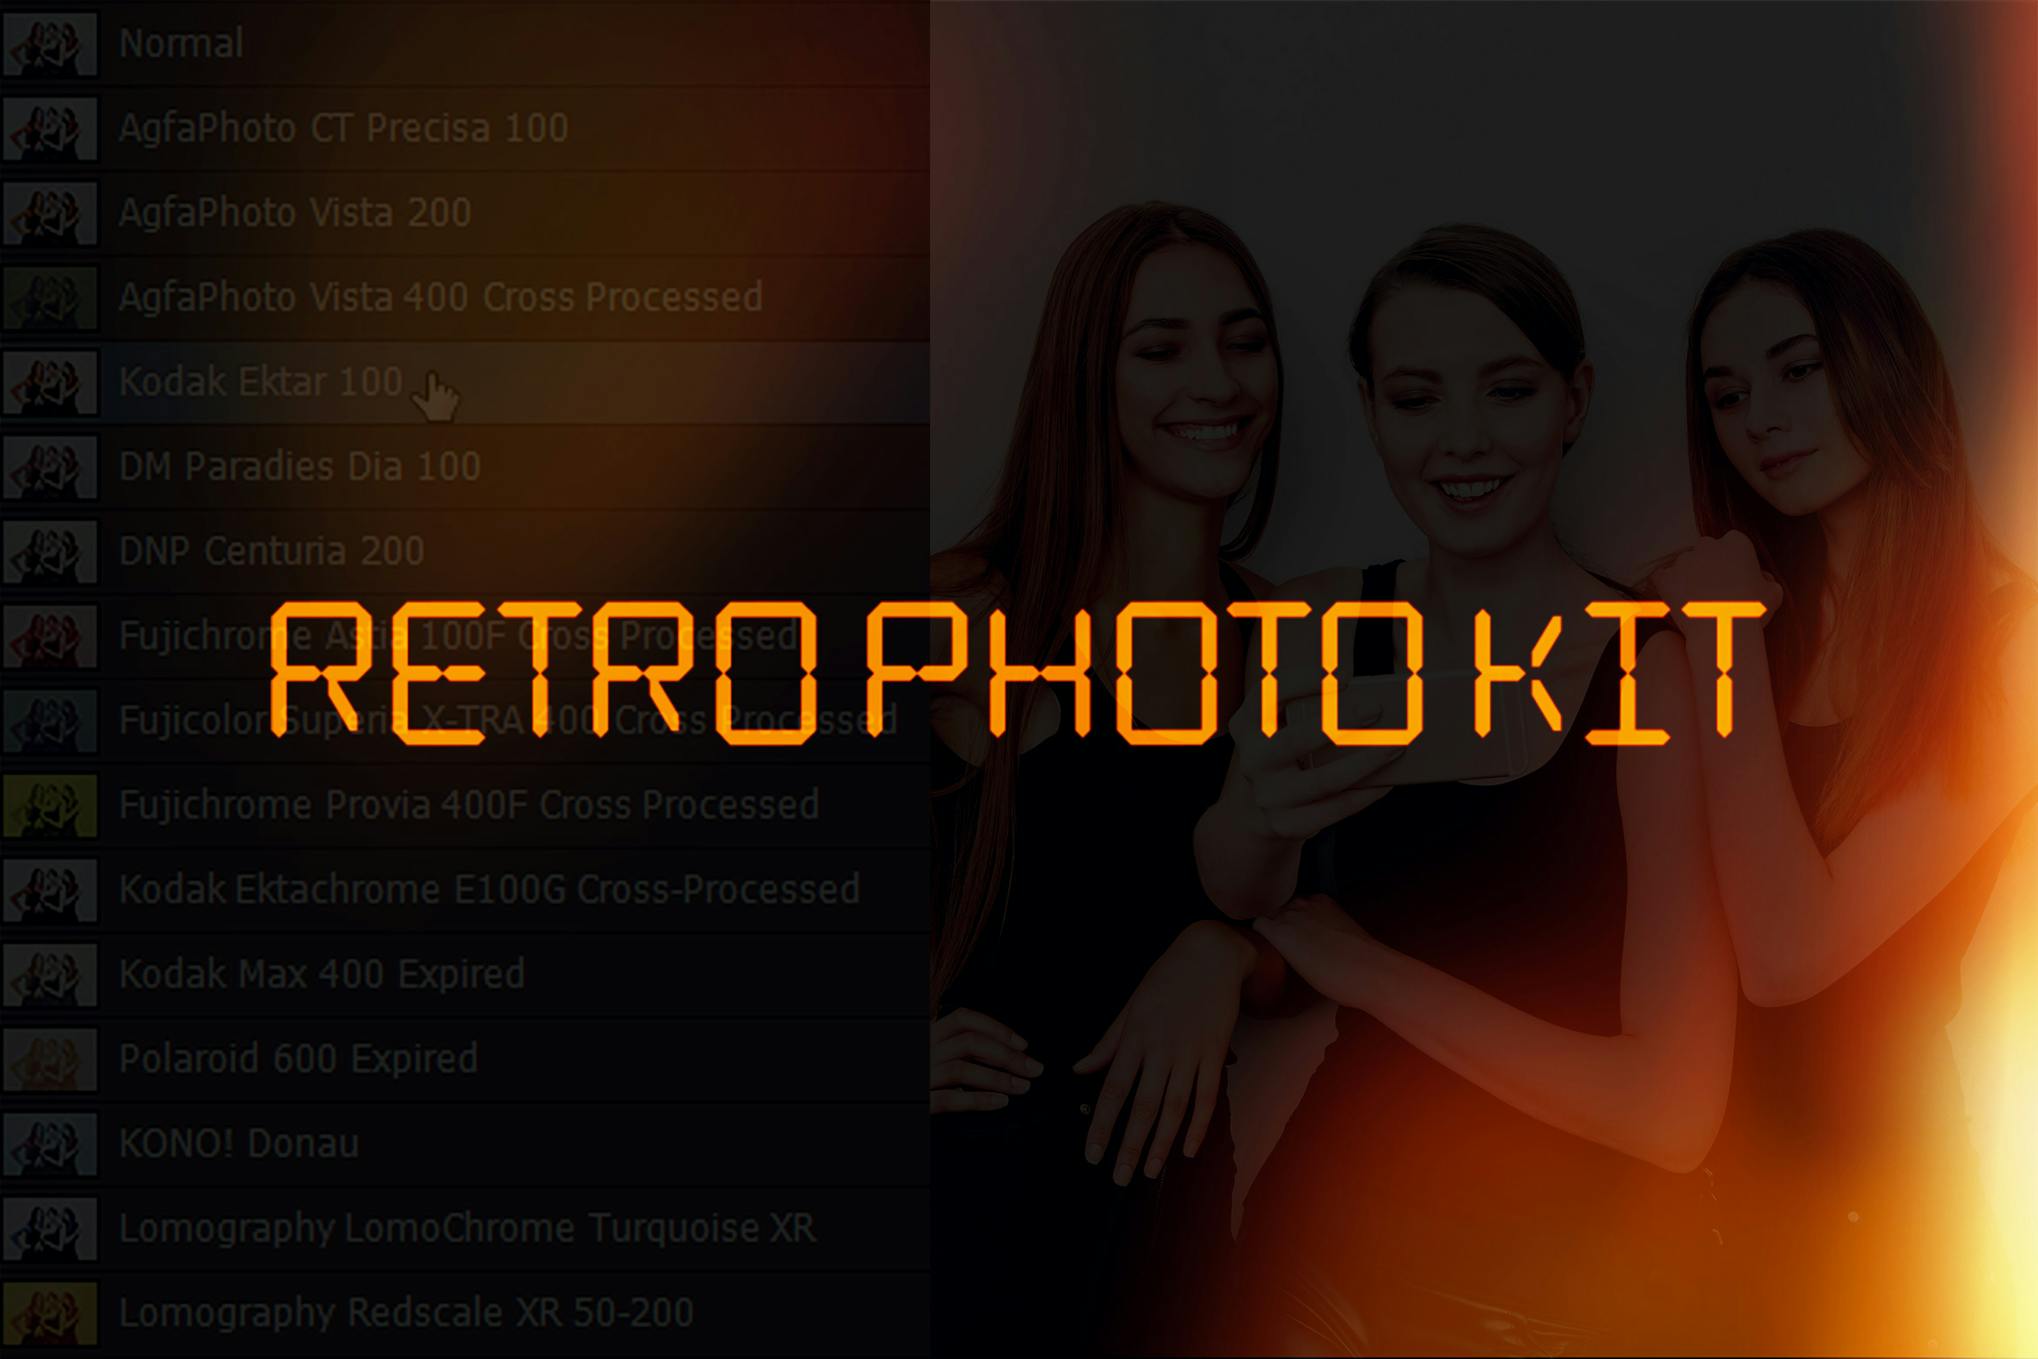 Retro Photo Kit Photoshop Actions